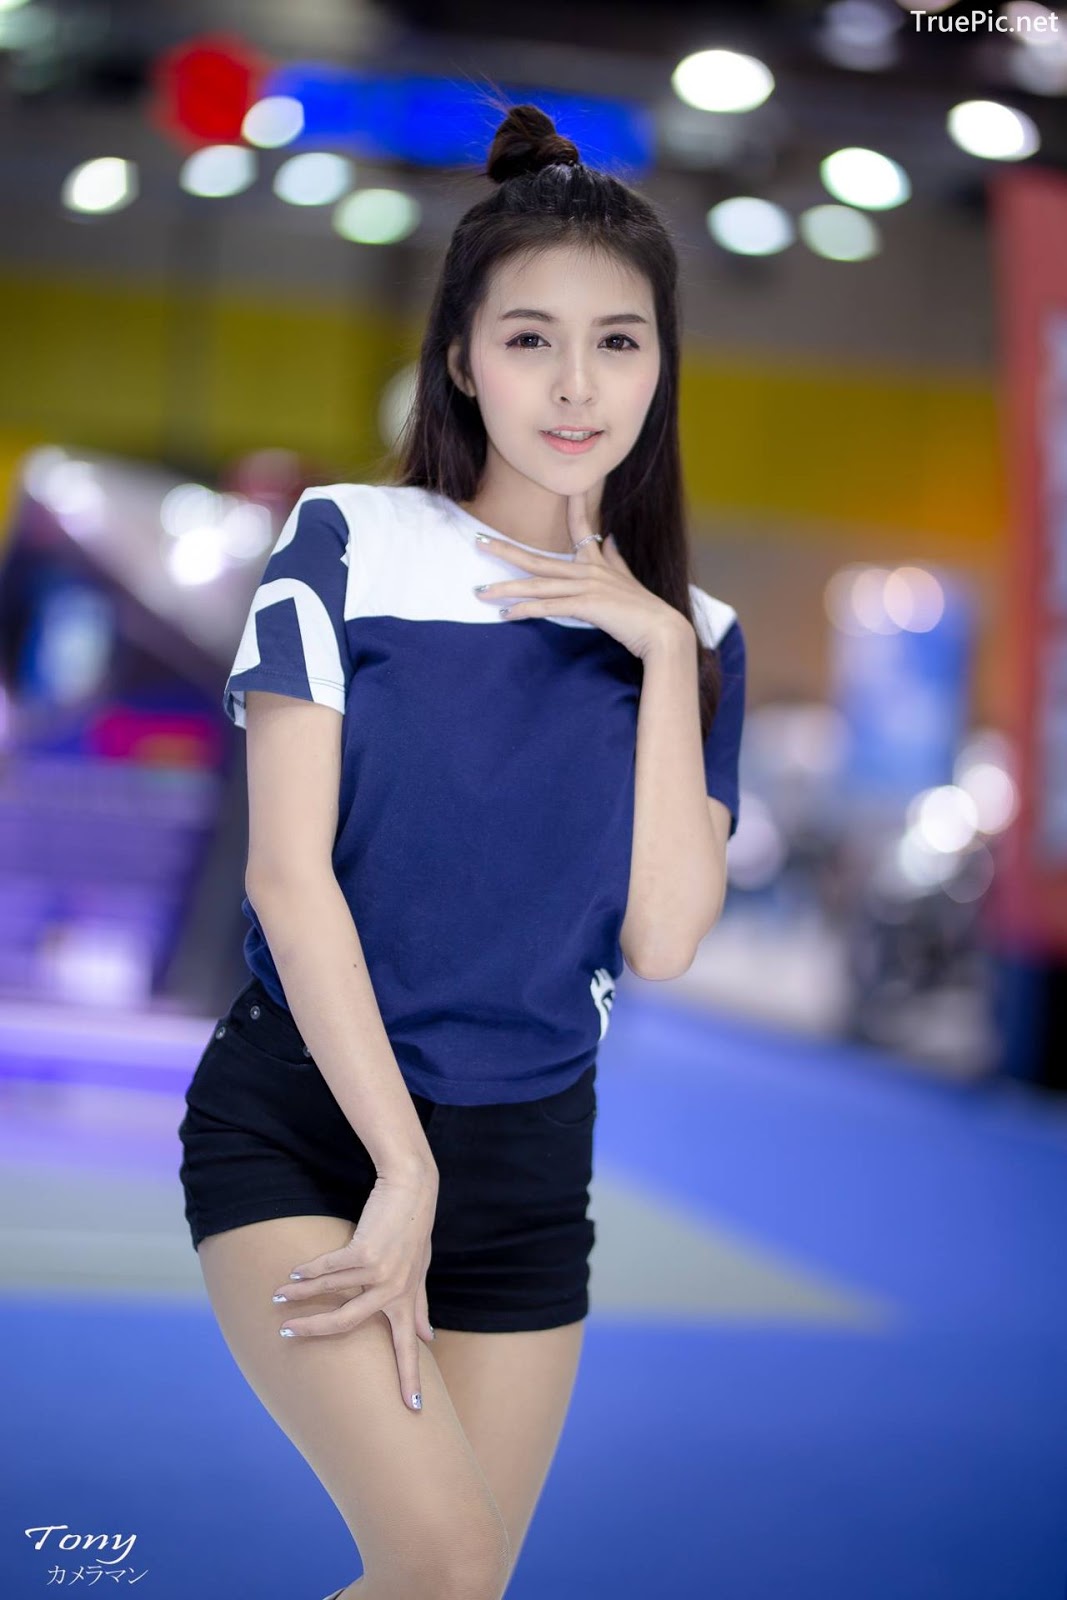 Image-Thailand-Hot-Model-Thai-Racing-Girl-At-Big-Motor-2018-TruePic.net- Picture-69